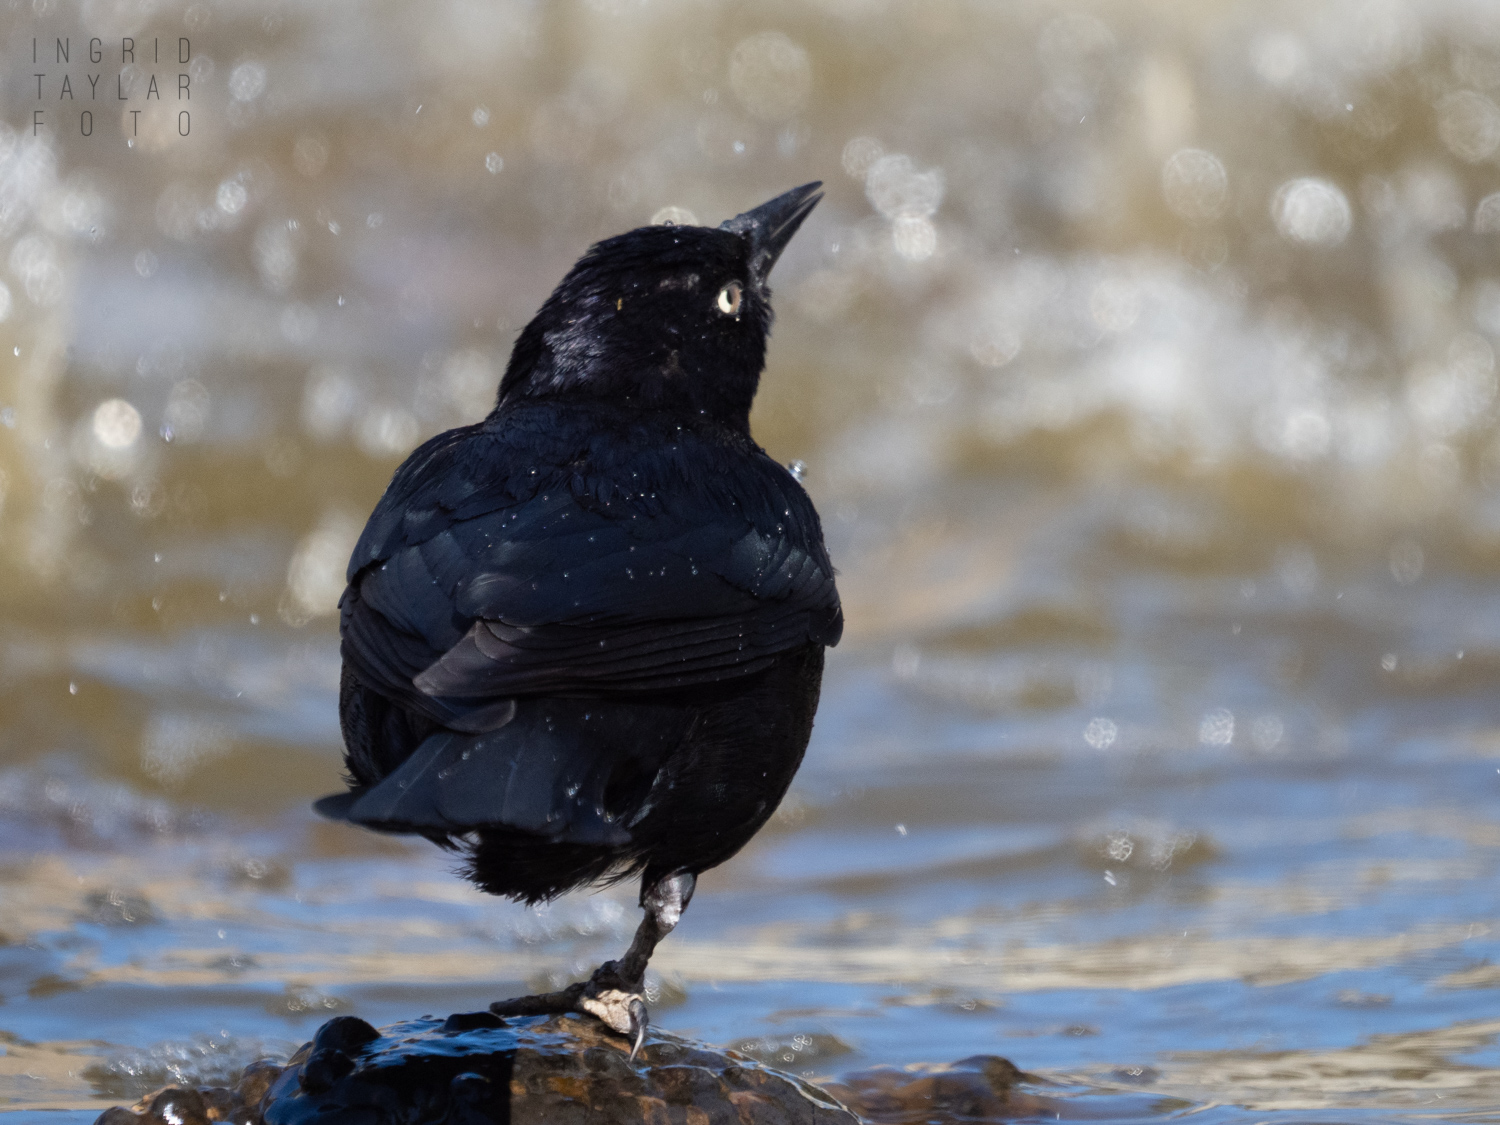 Brewer's Blackbird Male in Water Droplets